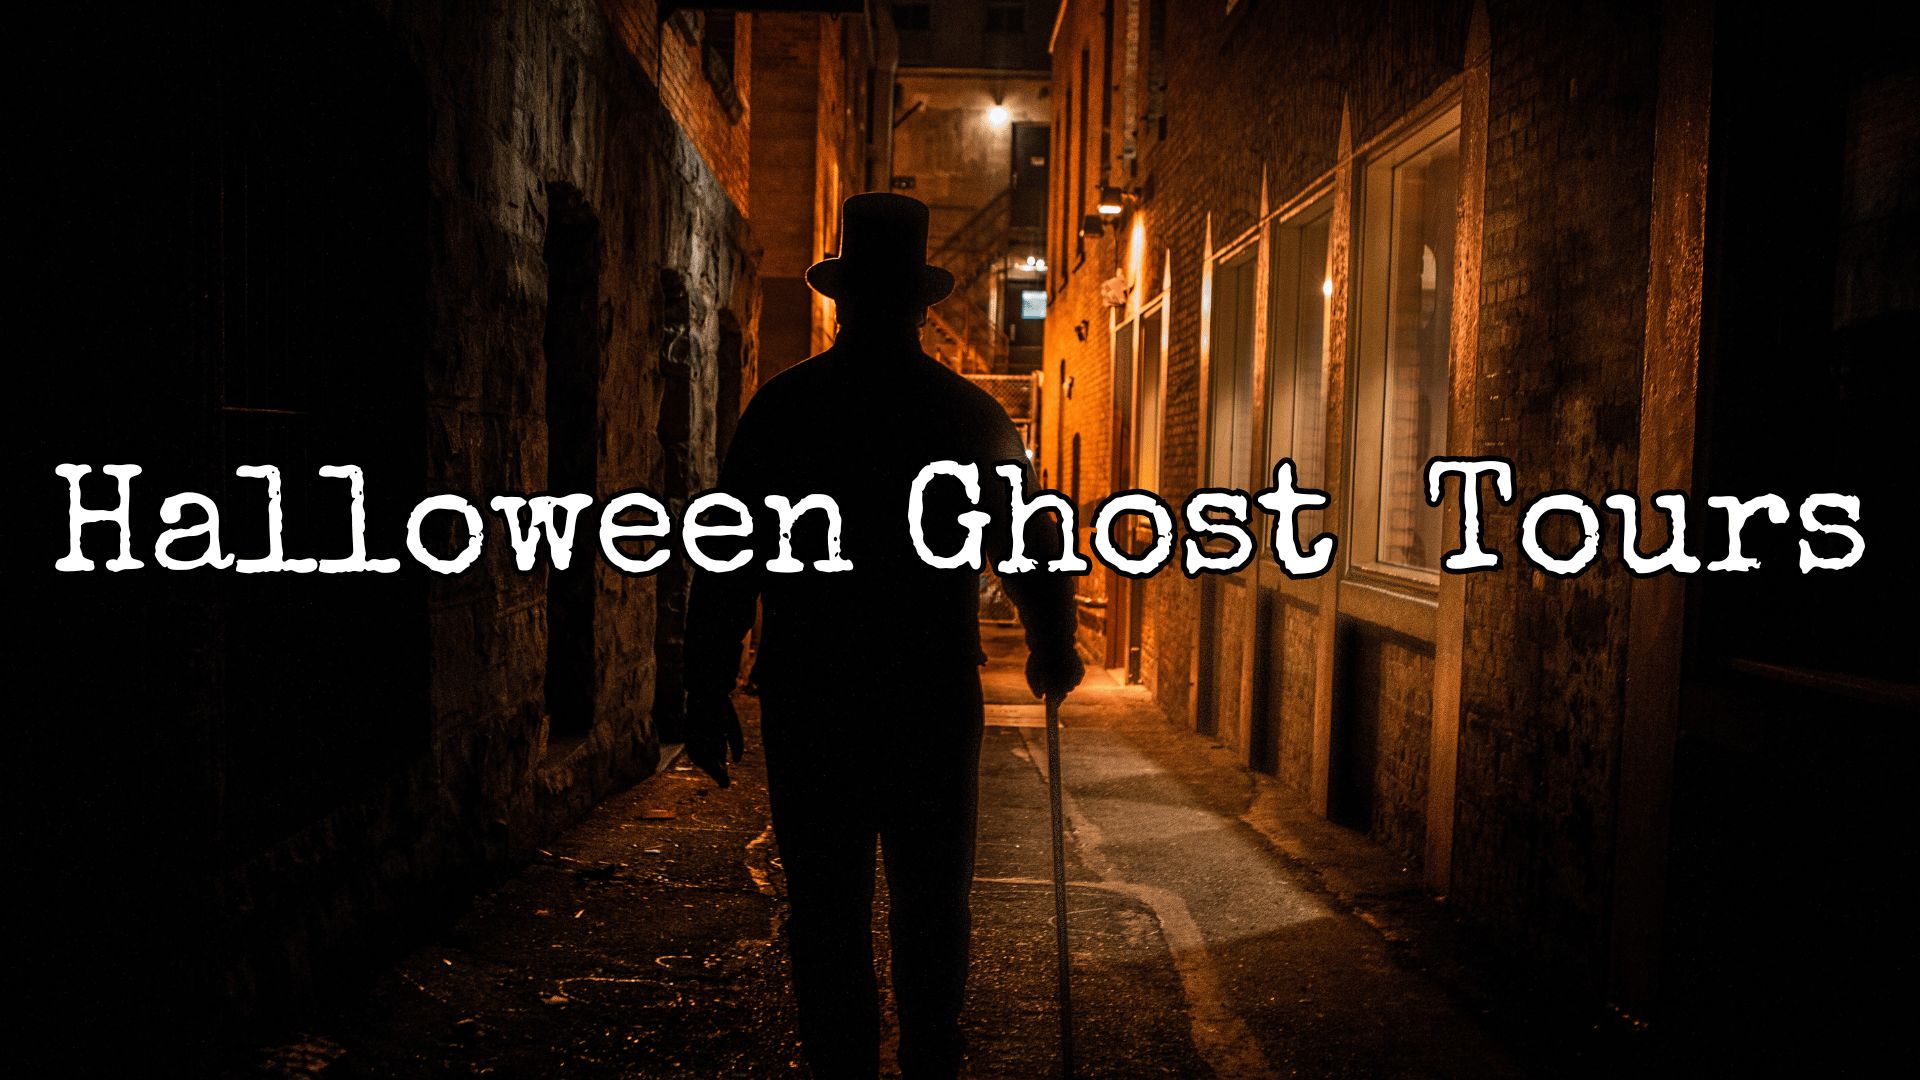 Halloween Ghost Tours, Victoria, British Columbia, Canada